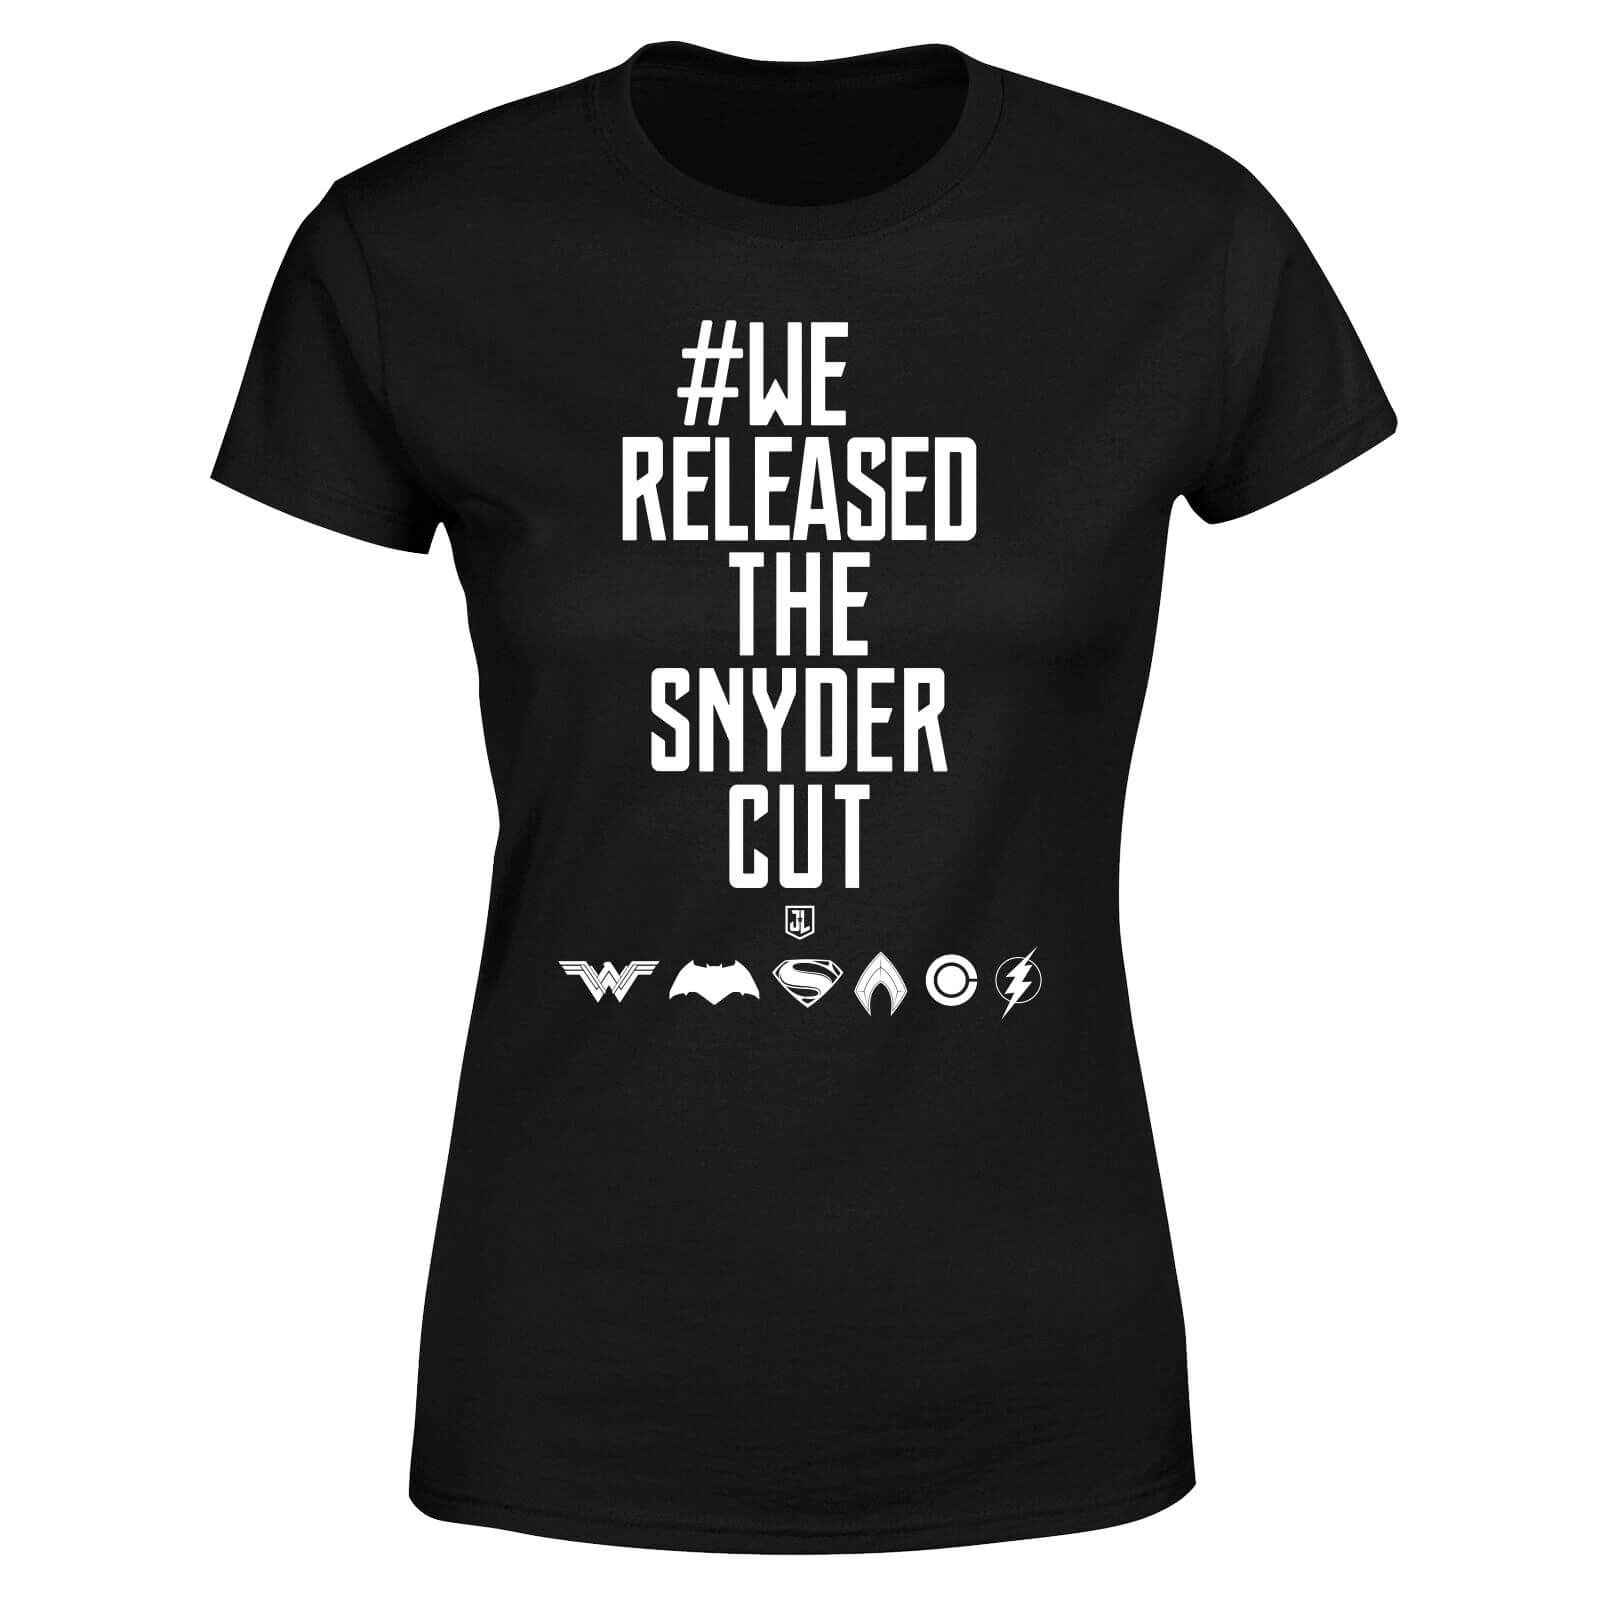 Justice League We Released The Snyder Cut Women's T-Shirt - Black - XS - Black